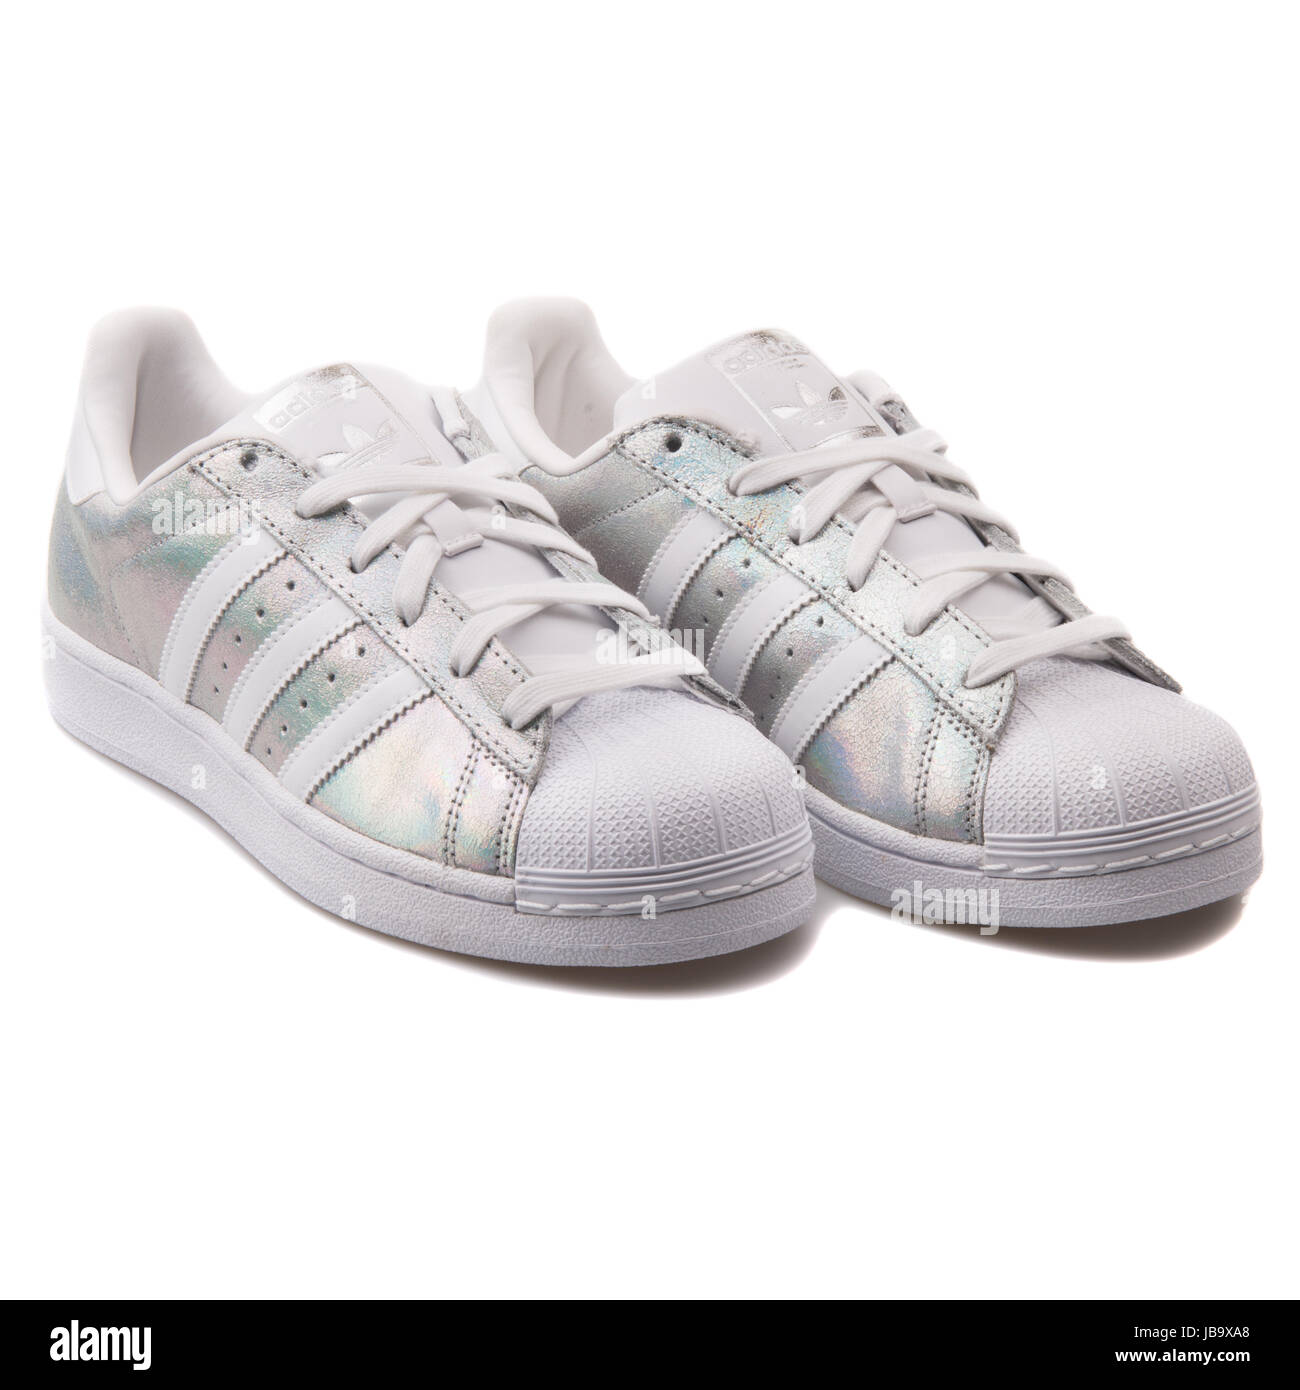 Adidas Superstar W Hologram Iridescent Women's Shoes - S81644 Stock Photo -  Alamy